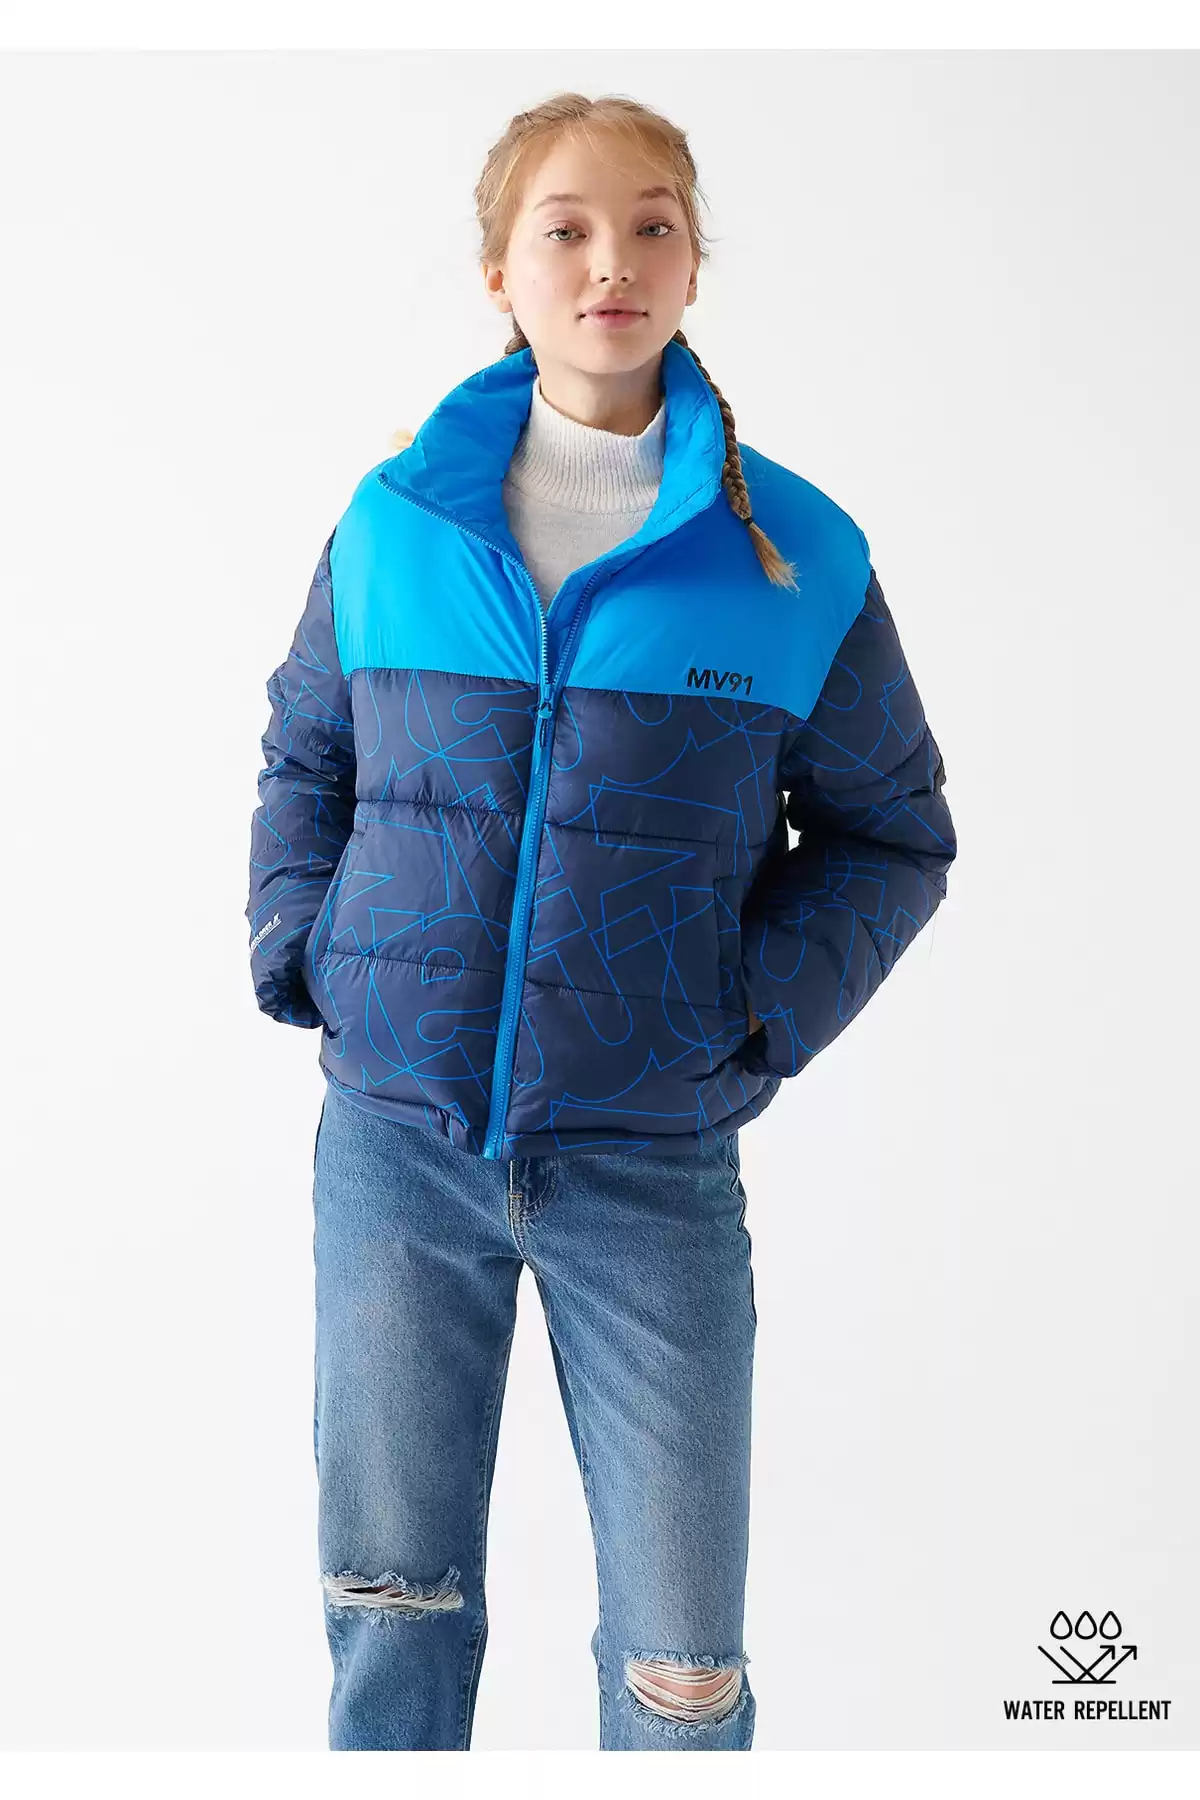 Block Color Down Jacket Loose Fit / Loose Fit 1110114-82815 برند   Mavi(ماوی) به رنگ  آبی سرمه ای مدل  بادی و ضد آب